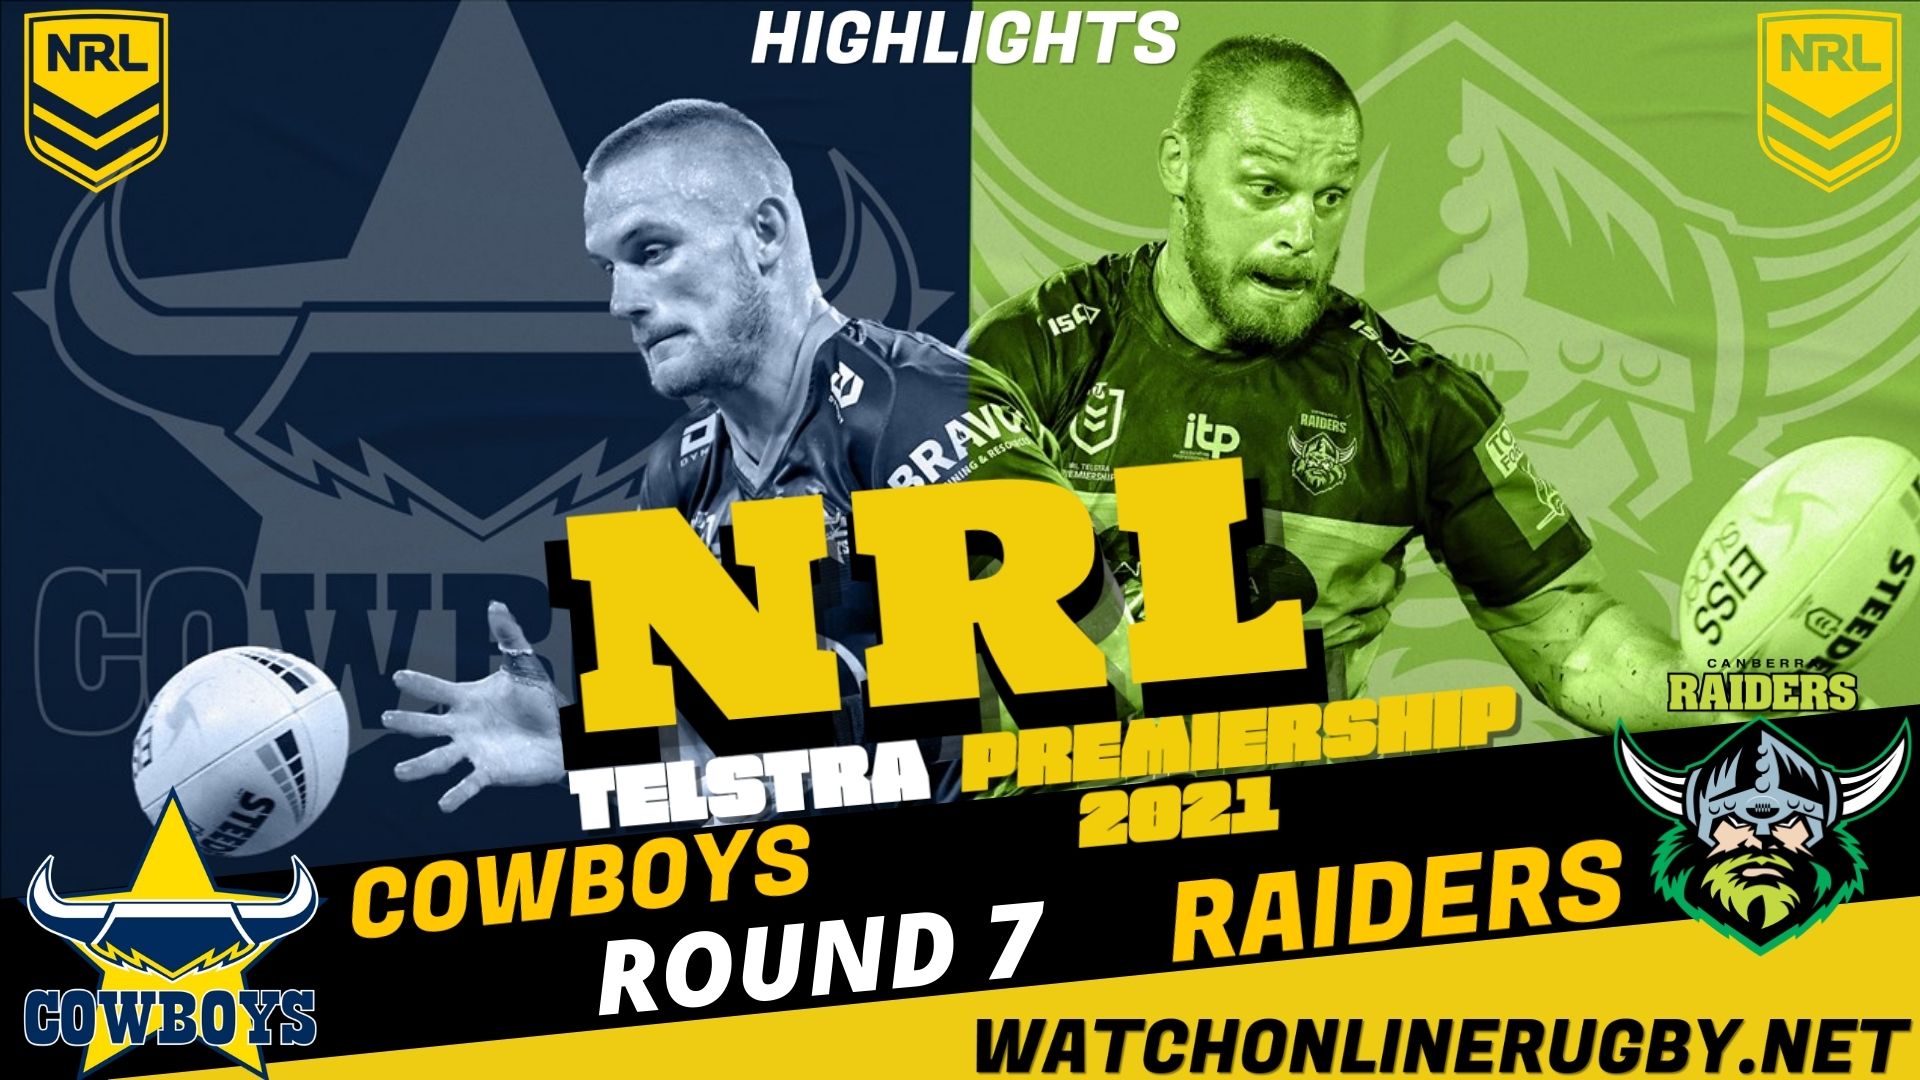 Cowboys Vs Raiders Highlights RD 7 NRL Rugby